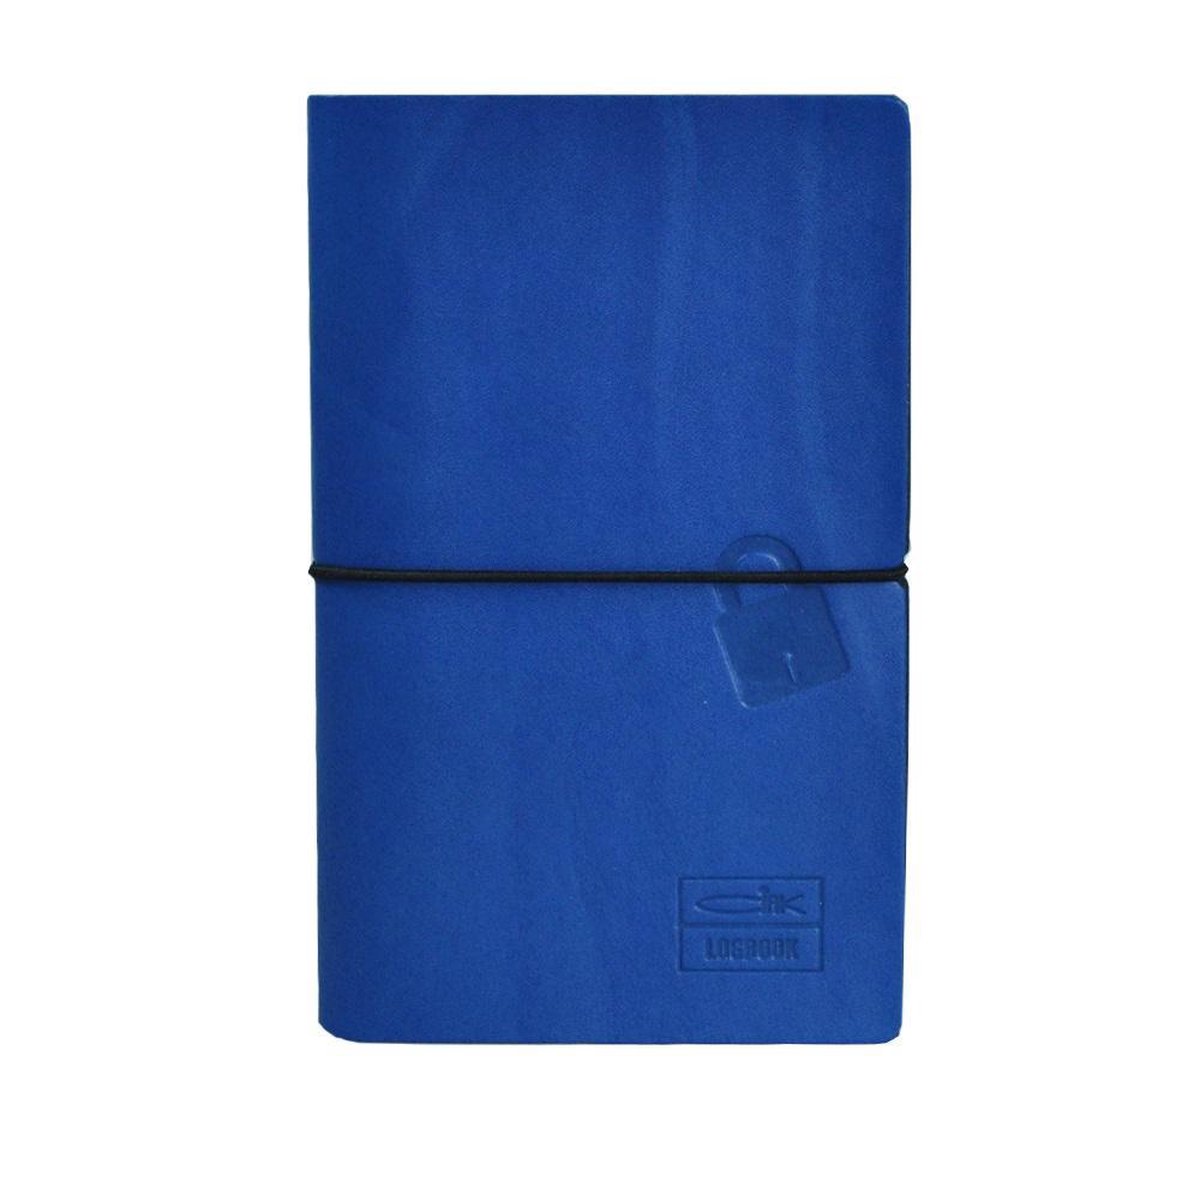 CIAK Wachtwoorden logboek - premium vegan leather - blauw